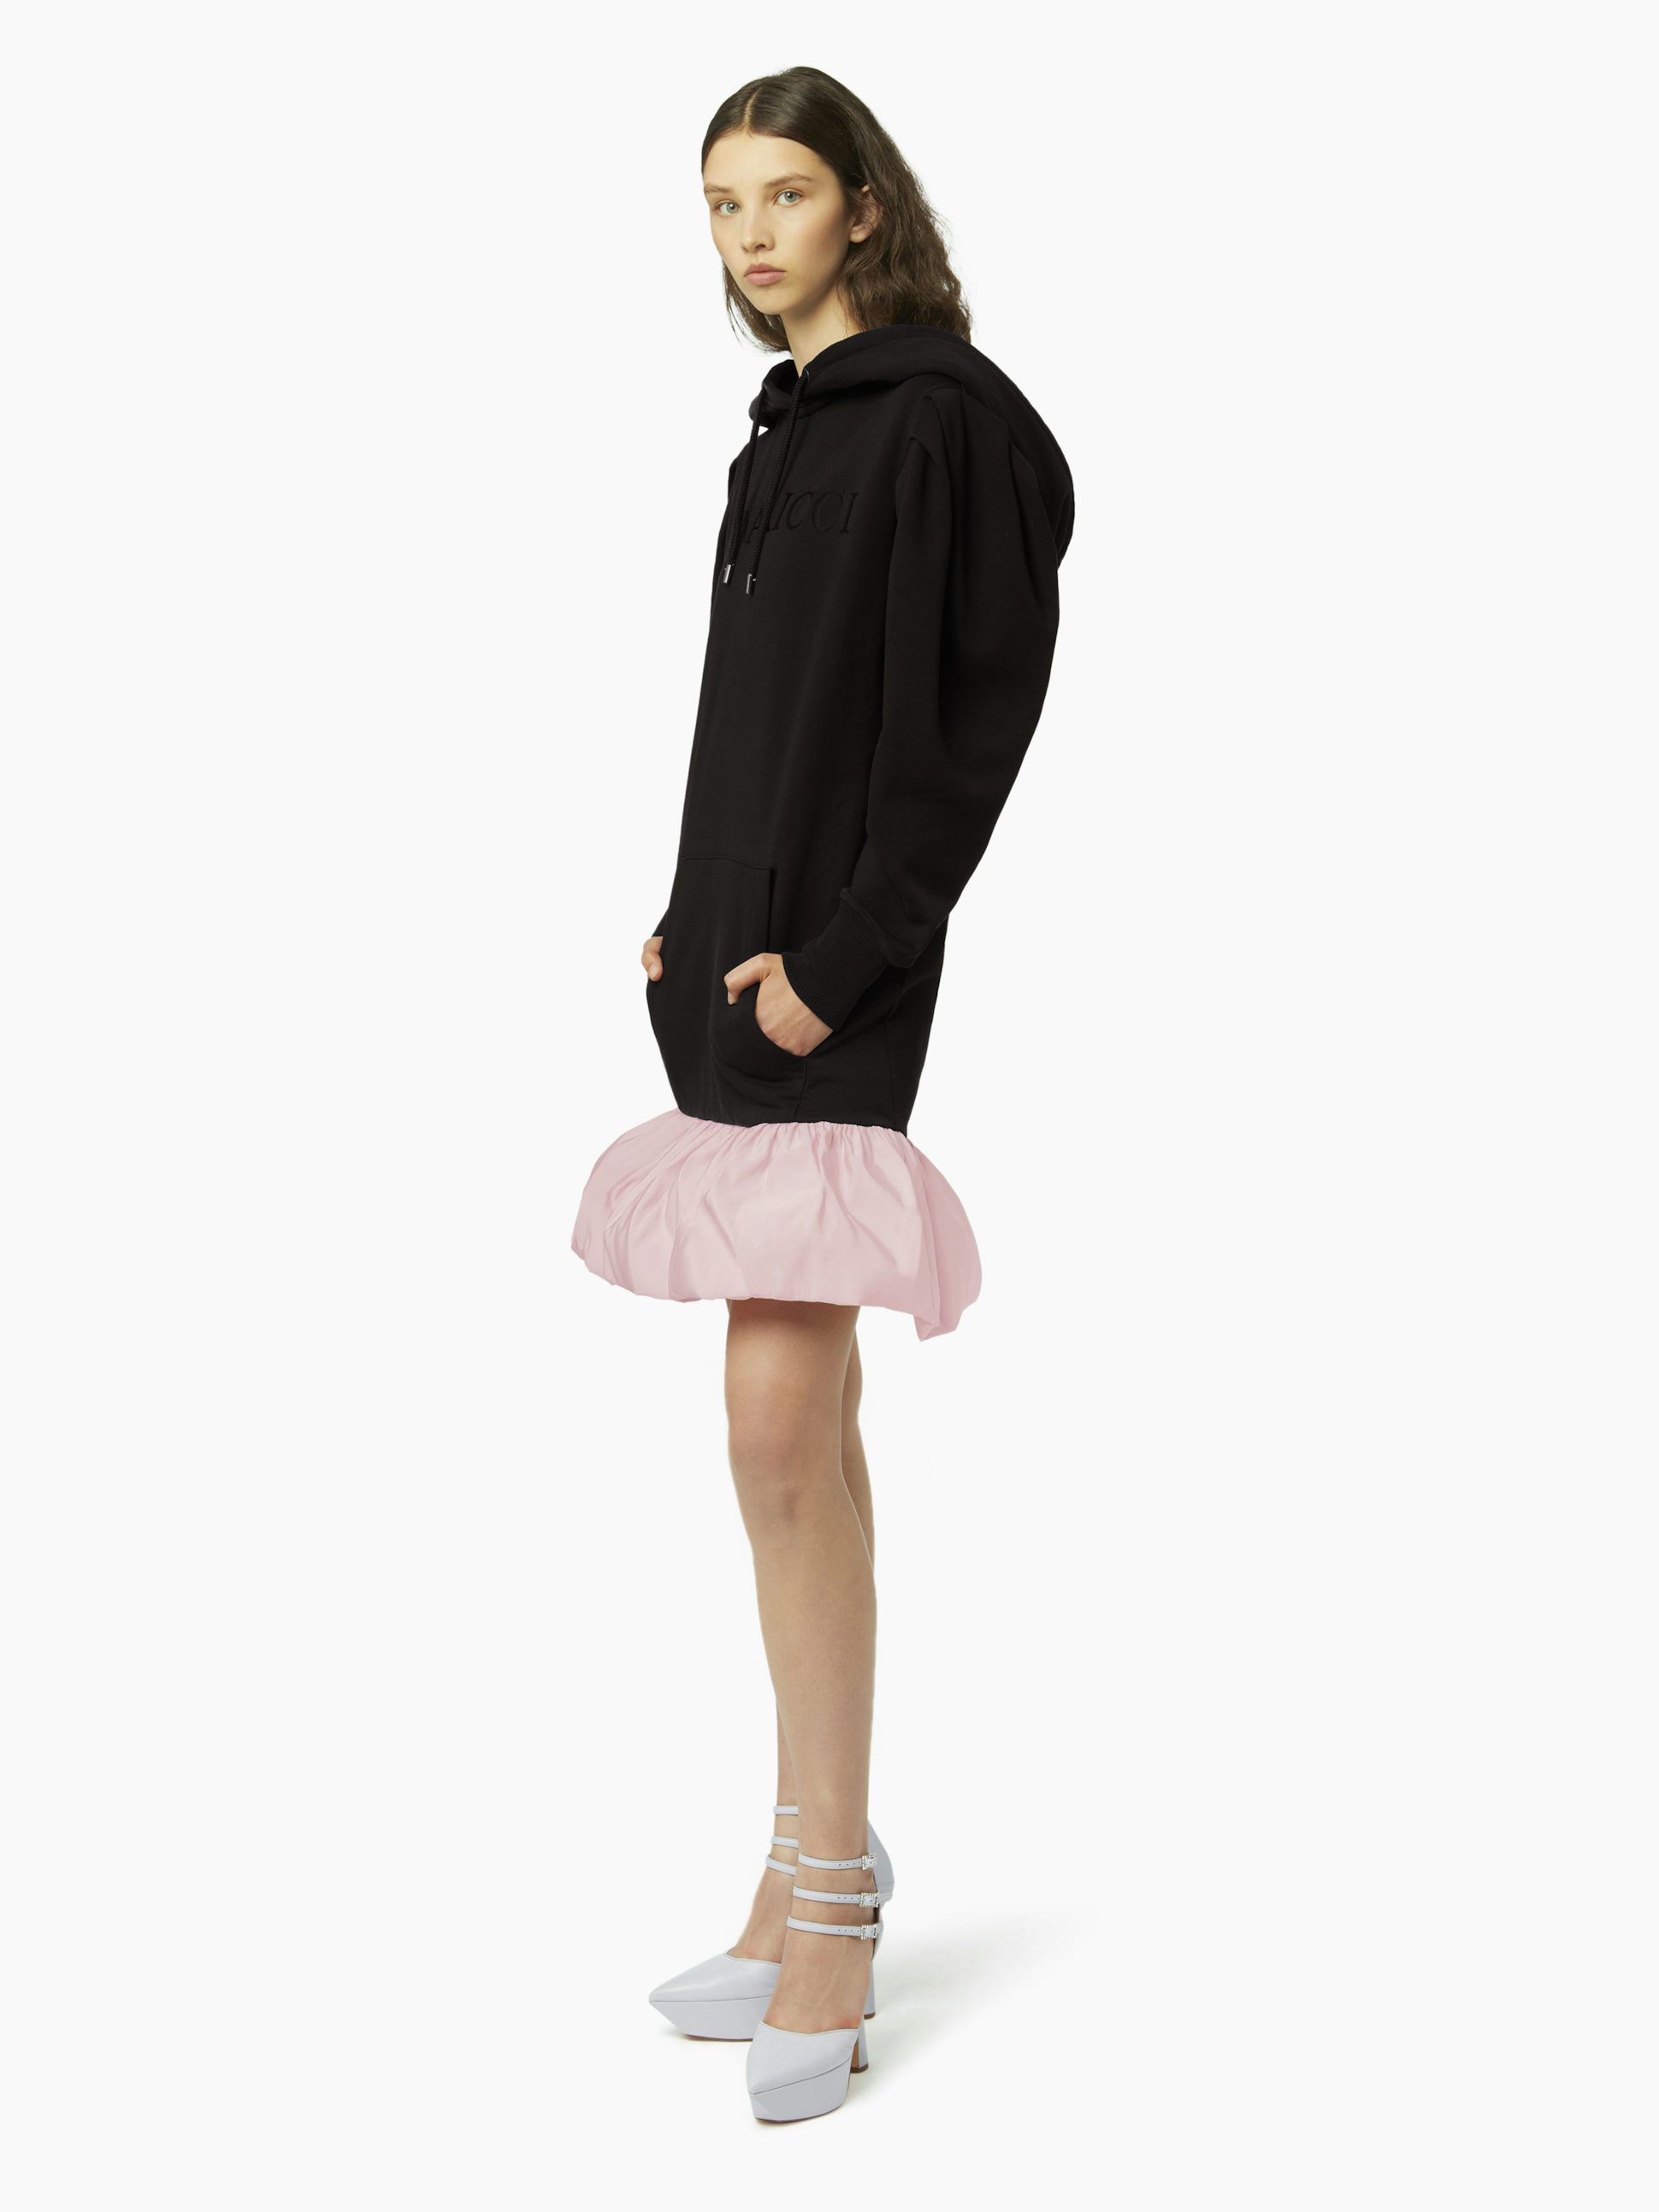 Peplum hoodie dress in black - Nina Ricci